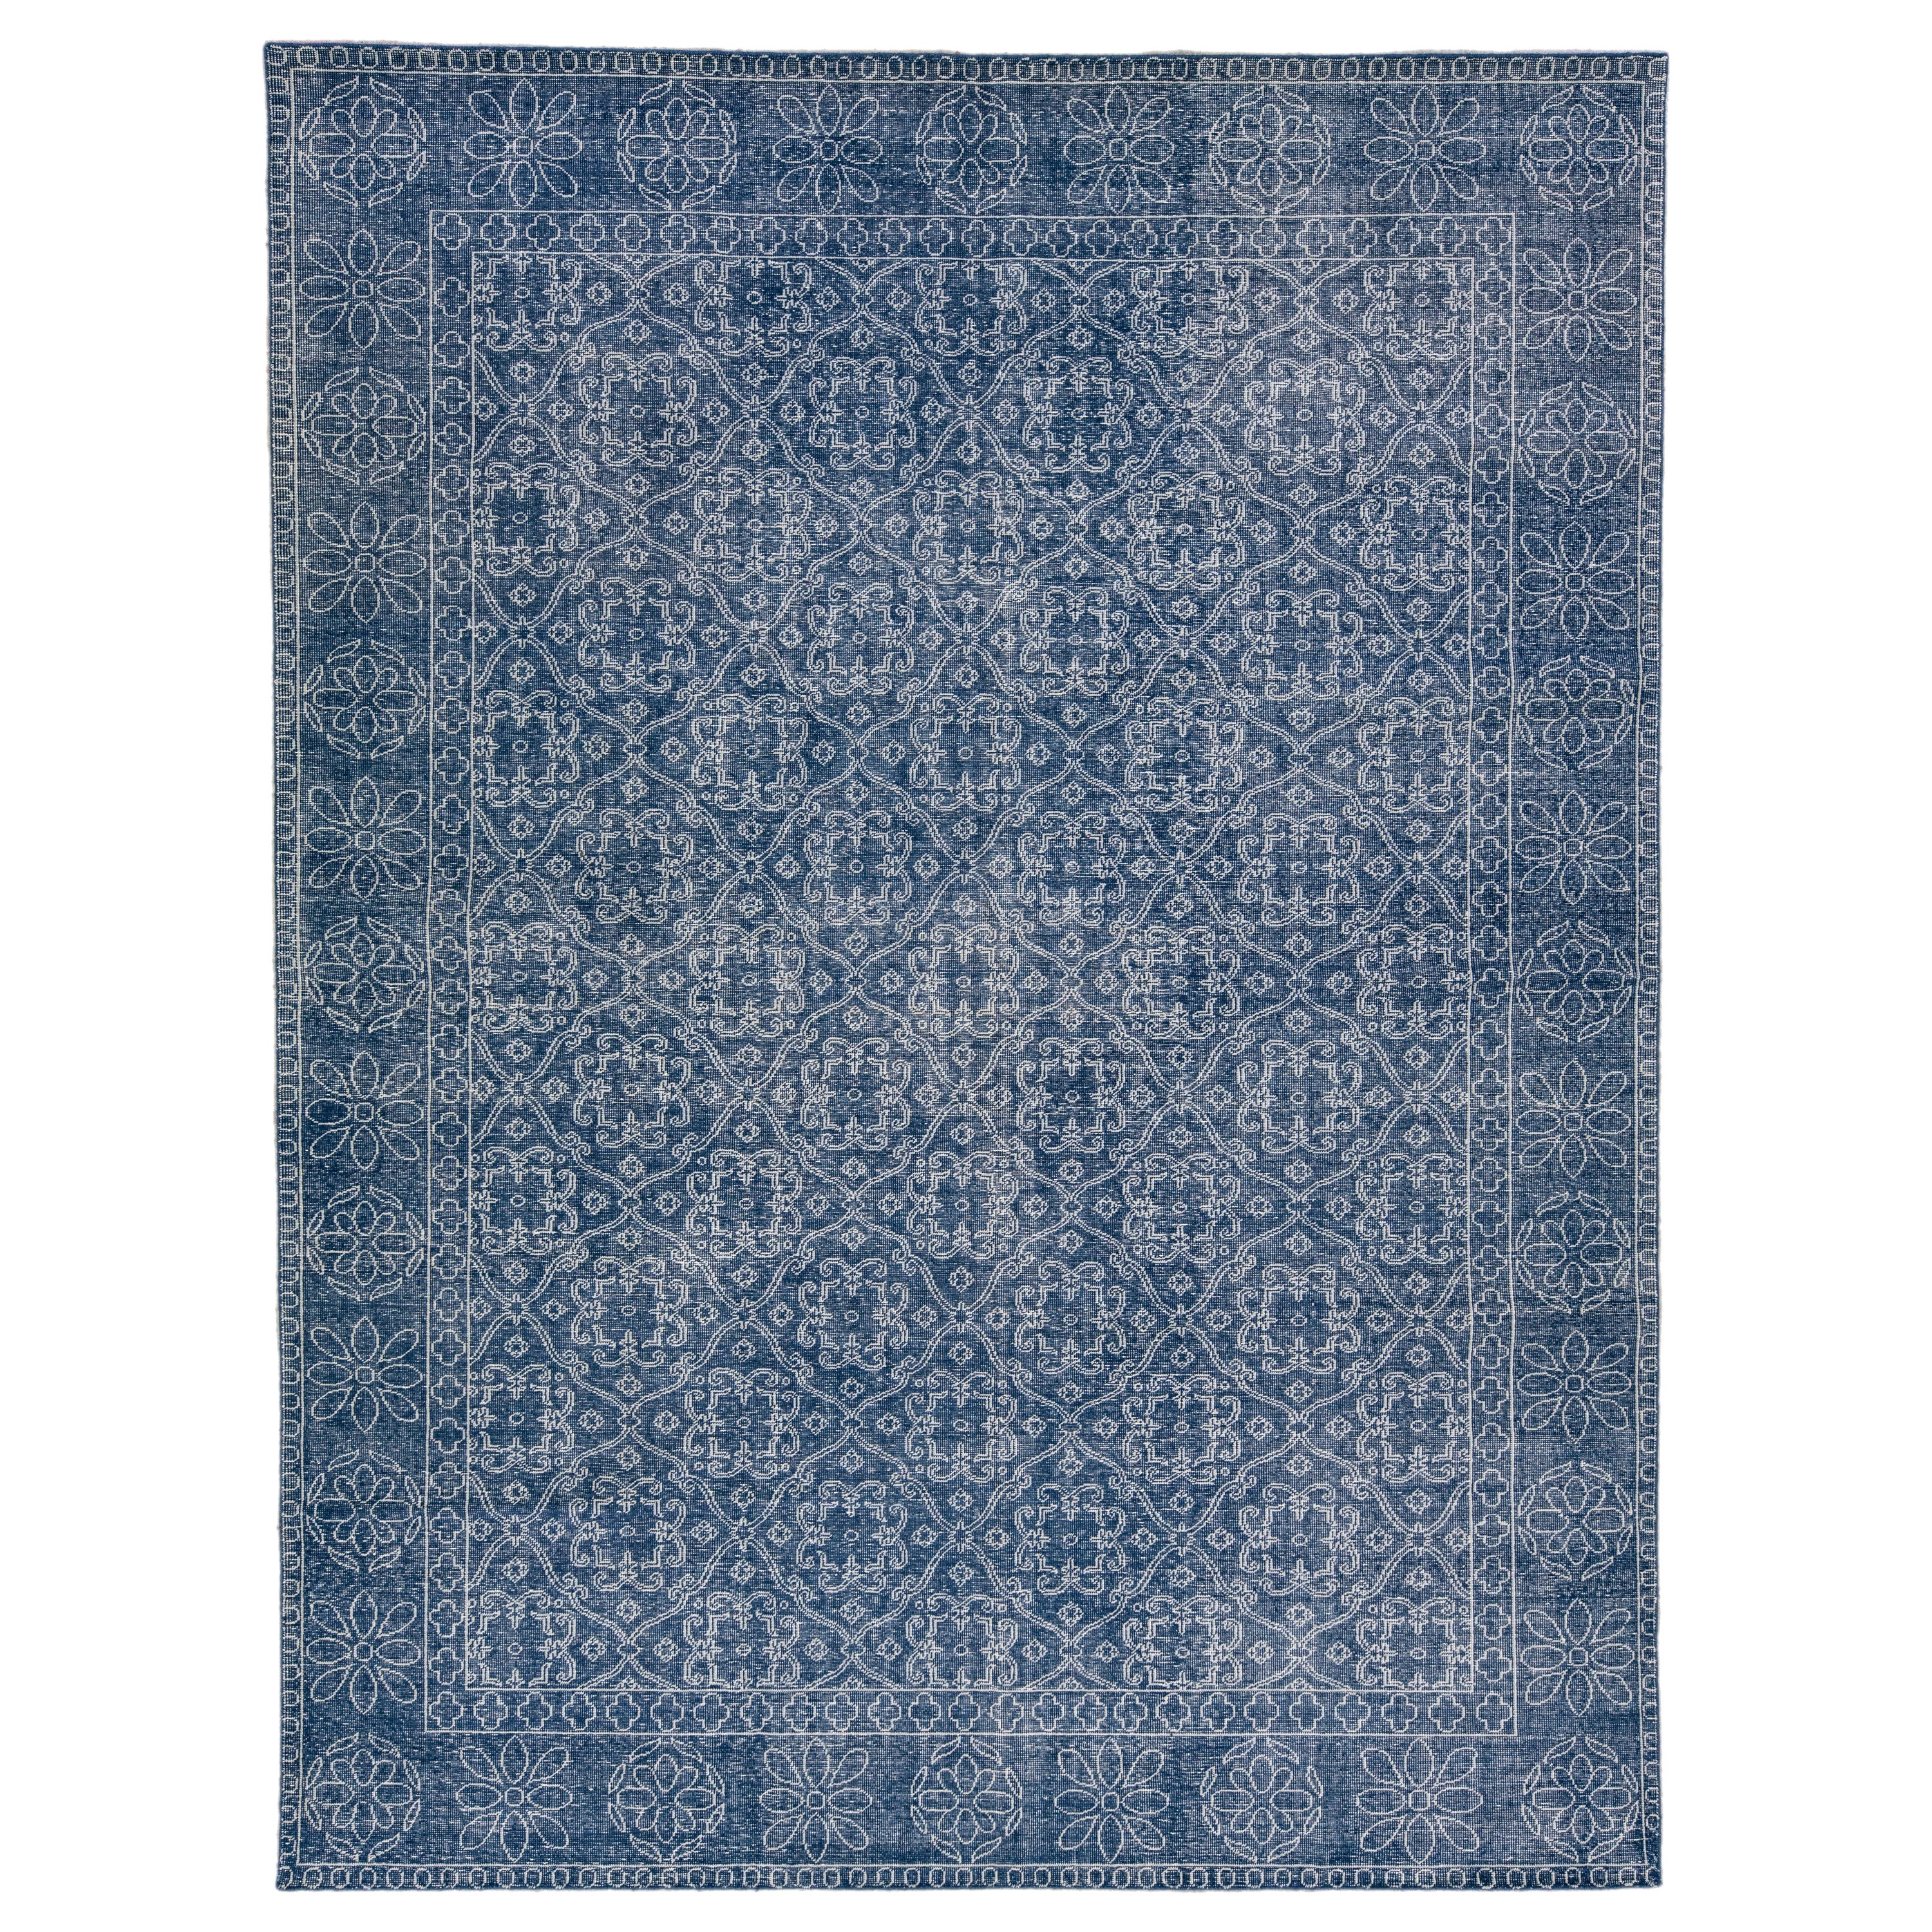 Blue Mid-Century Modern Style Handmade Floral Trellis Motif Wool Rug